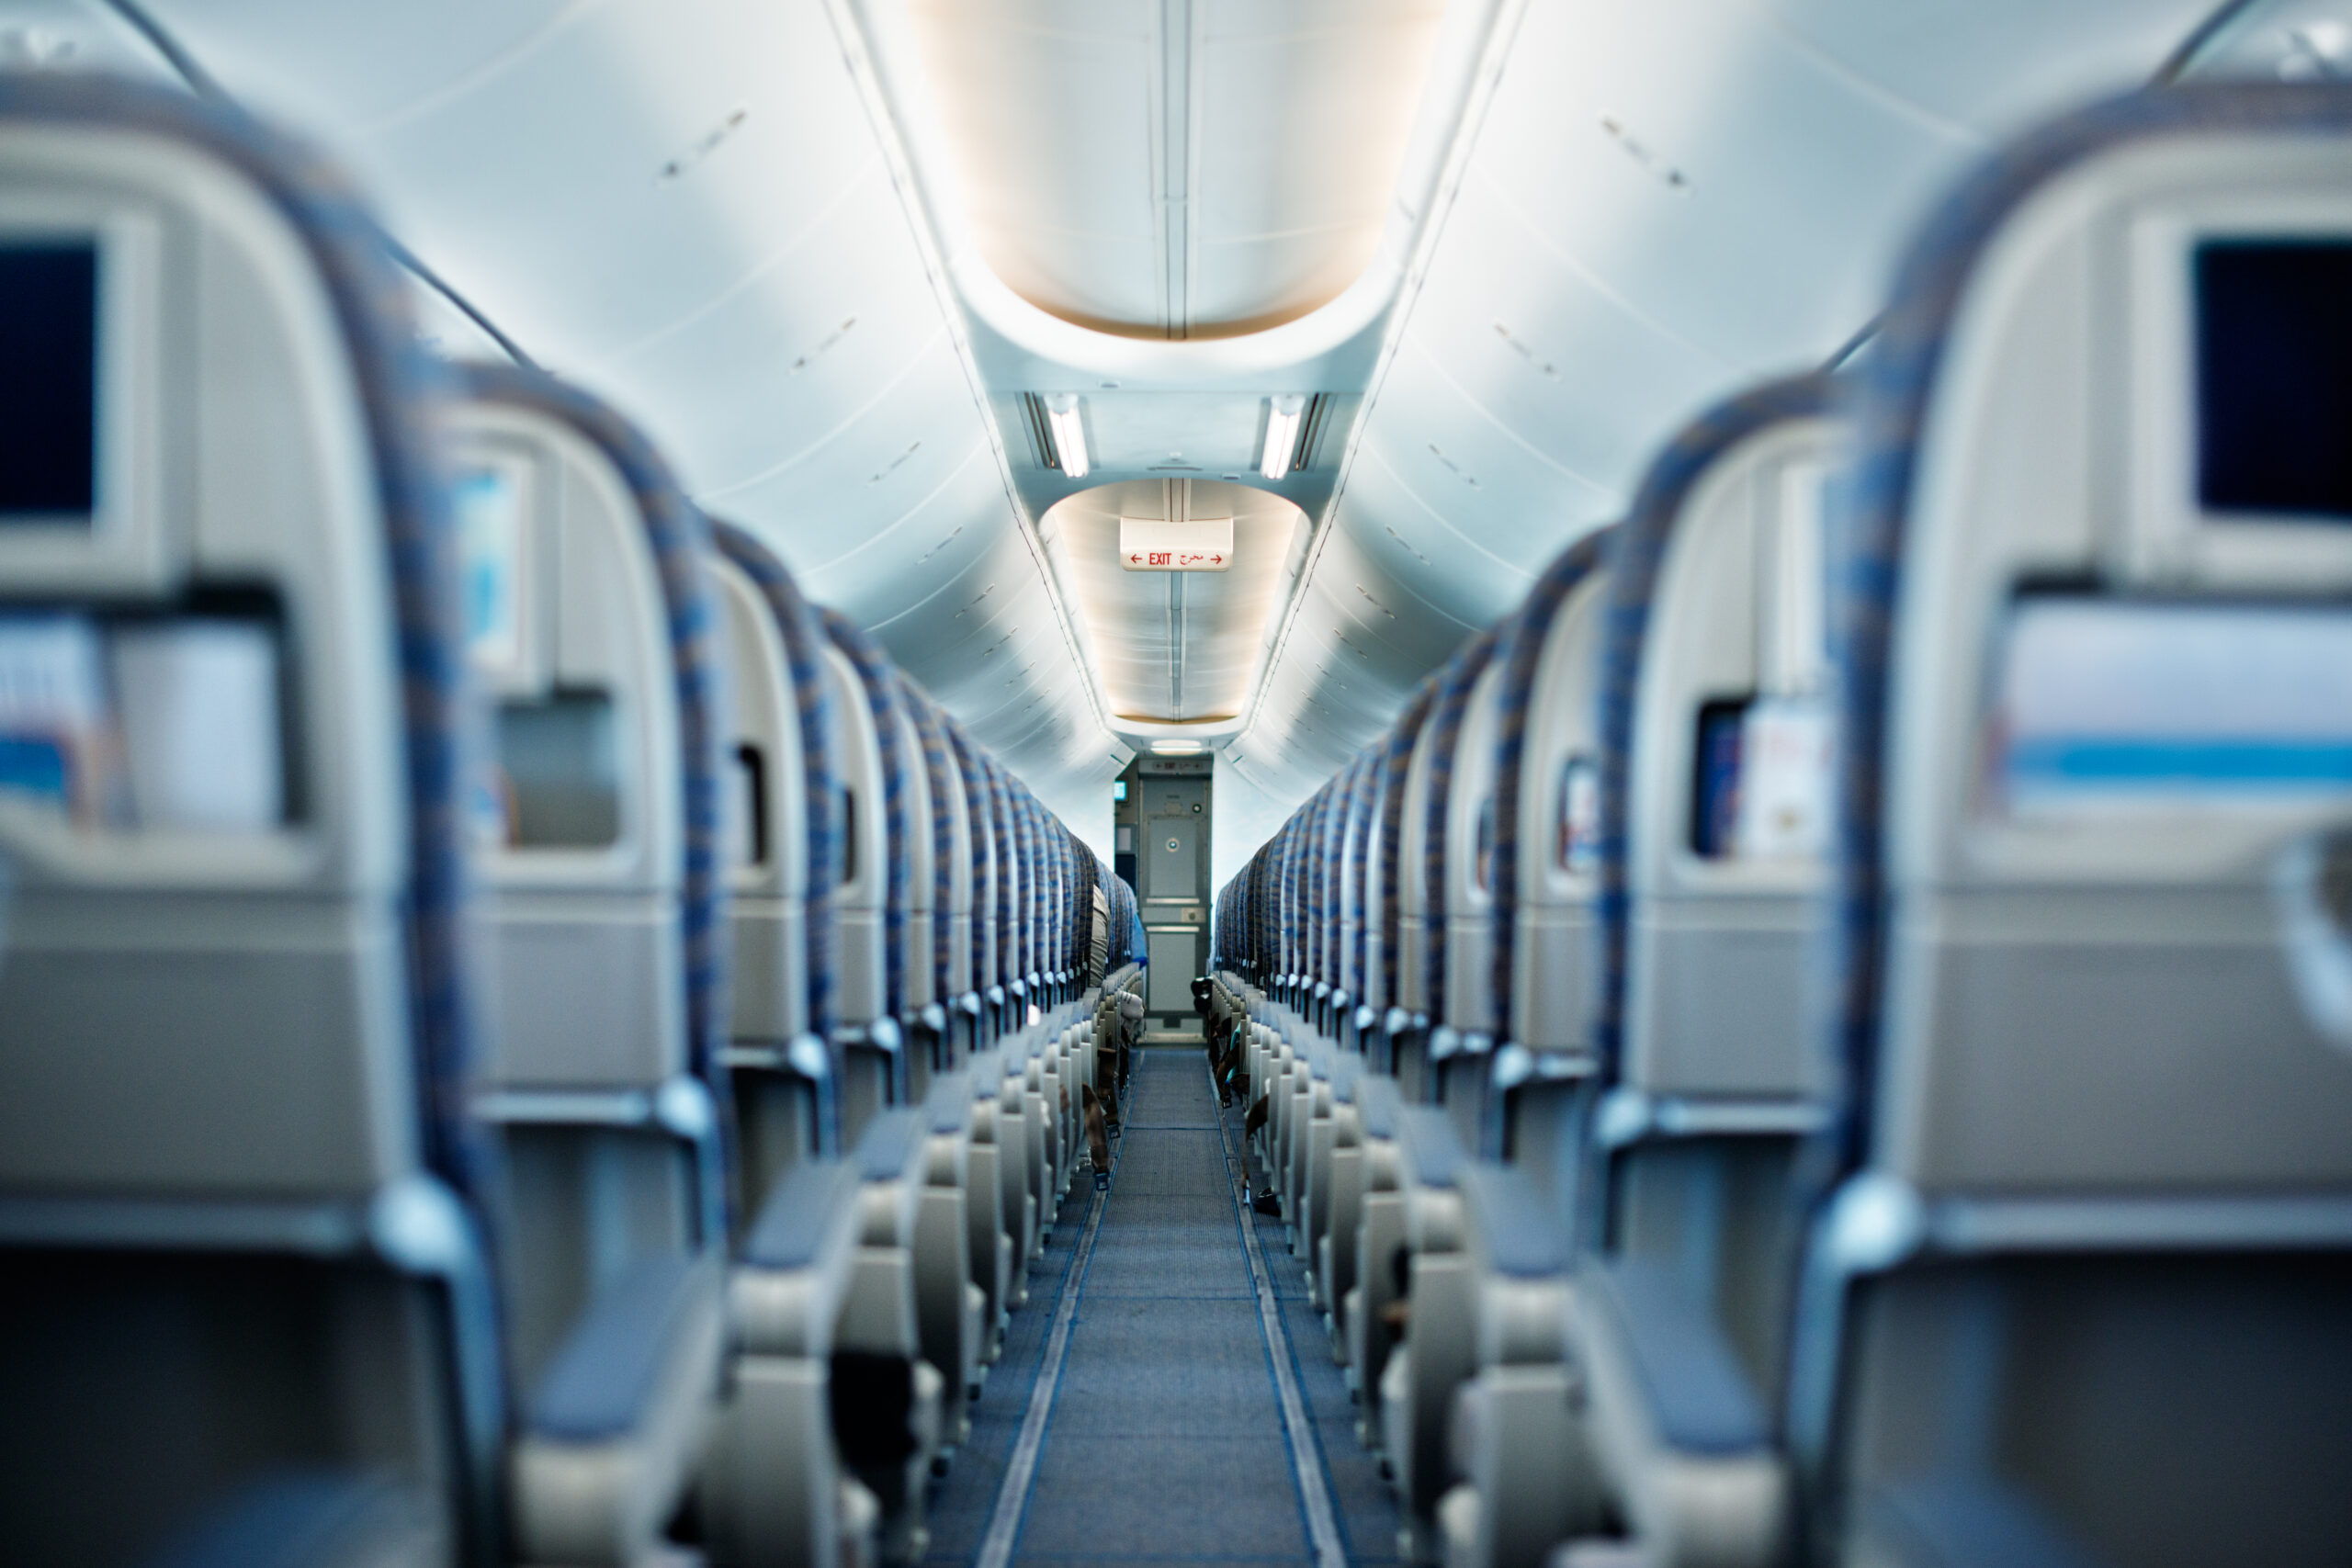 Row of empty airplane seats. Shallow DOF.